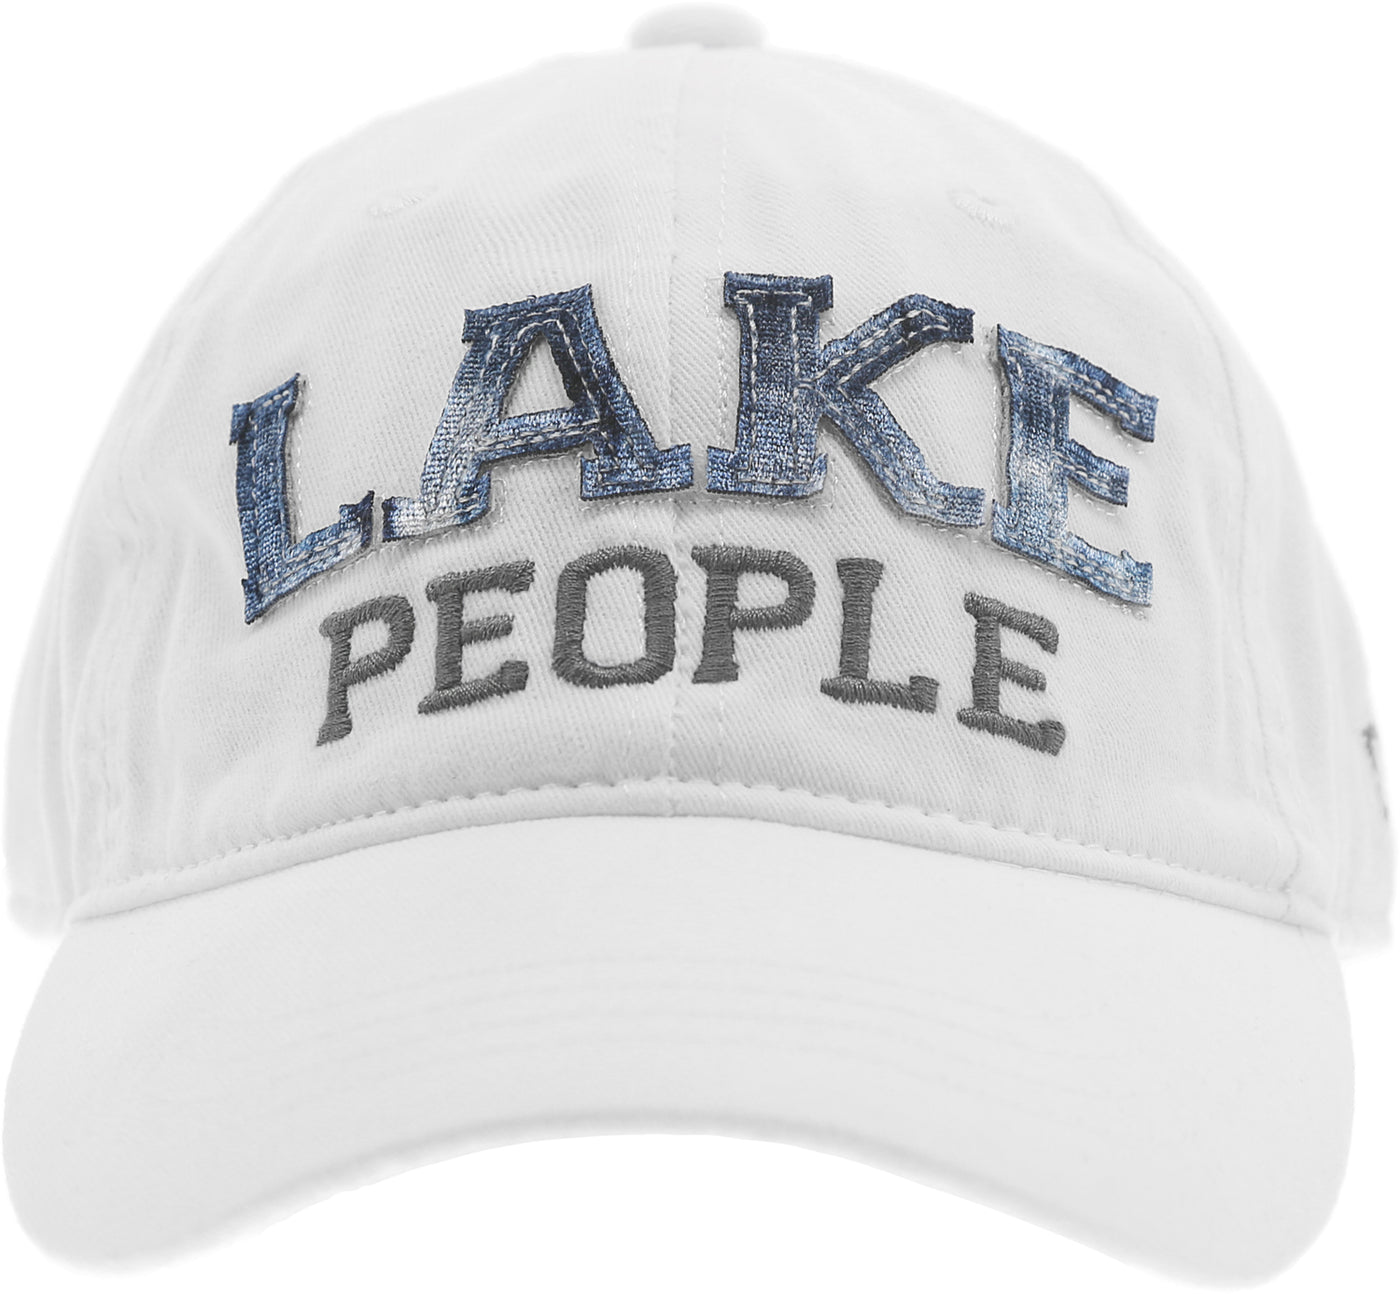 Lake People White or Gray Adjustable Hat